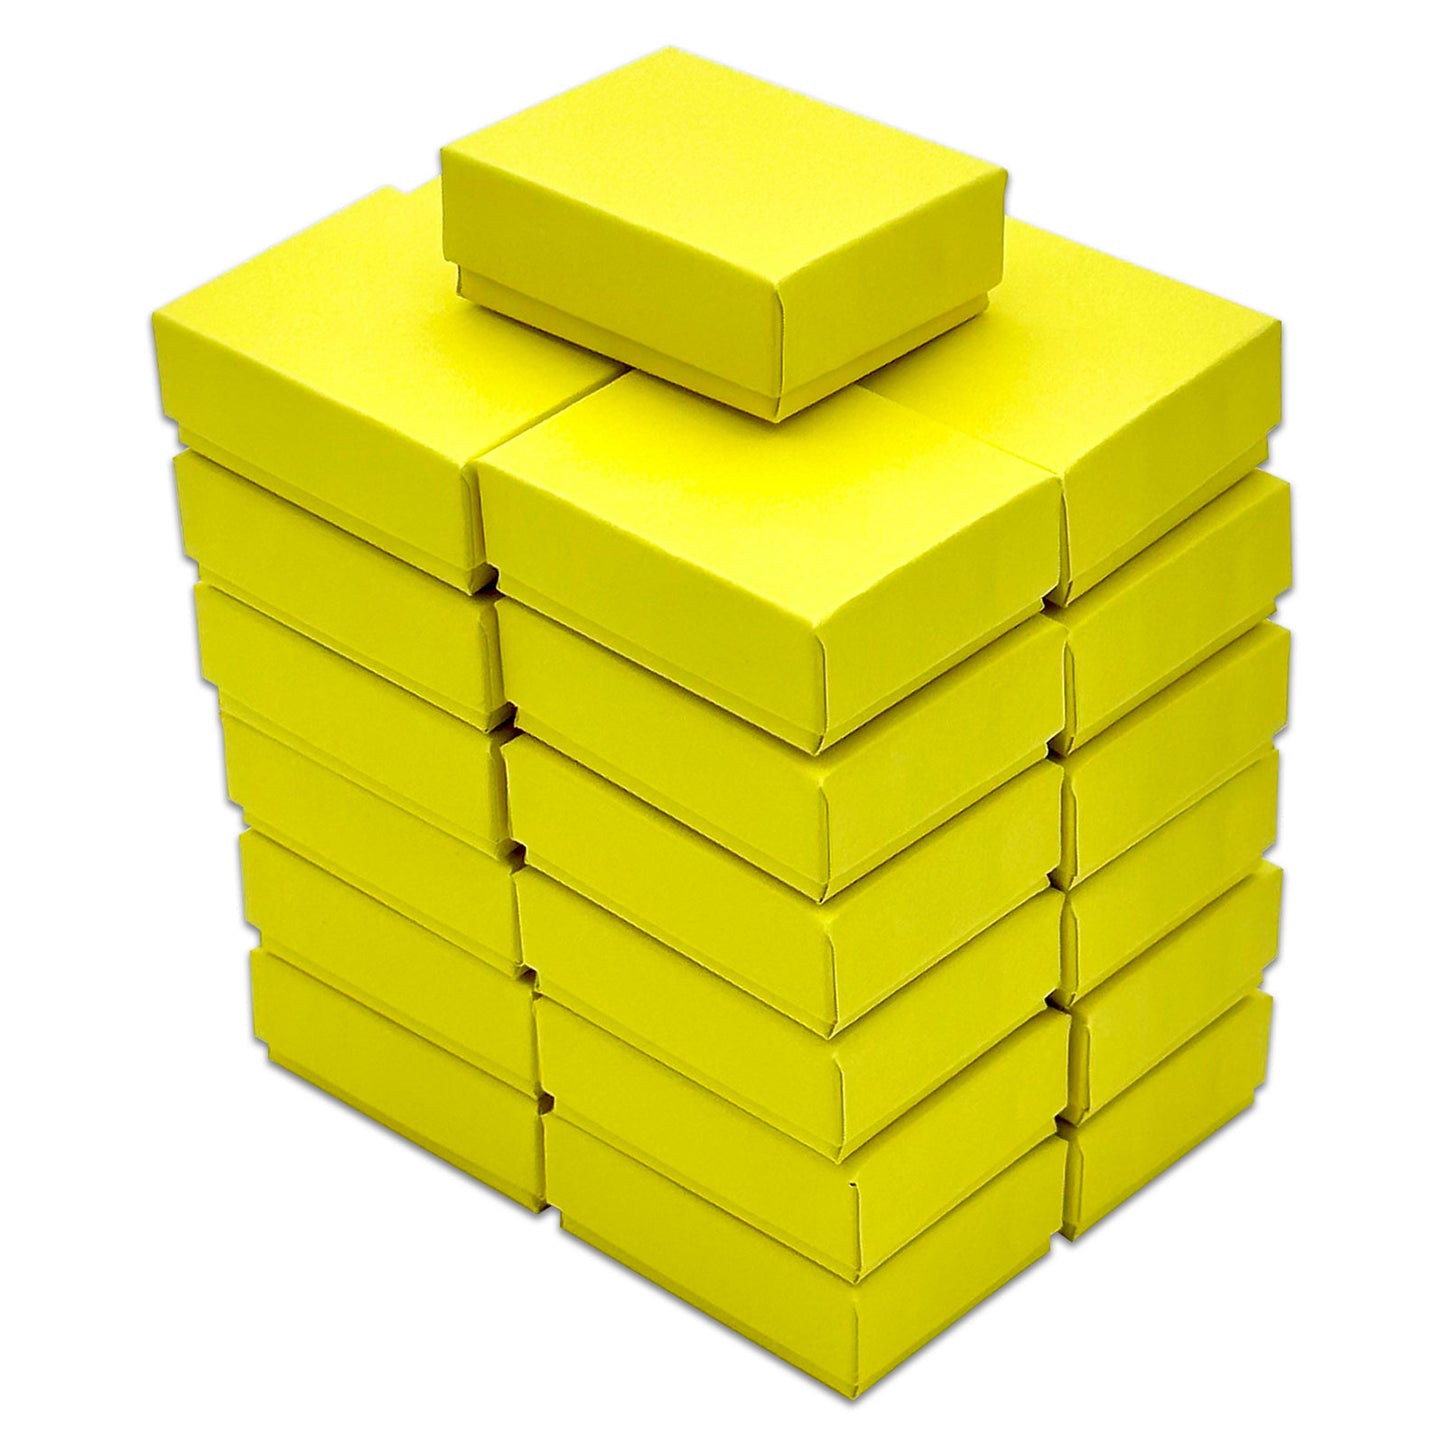 2 1/8" x 1 5/8" x 3/4" Mustard Yellow Cotton Filled Paper Box